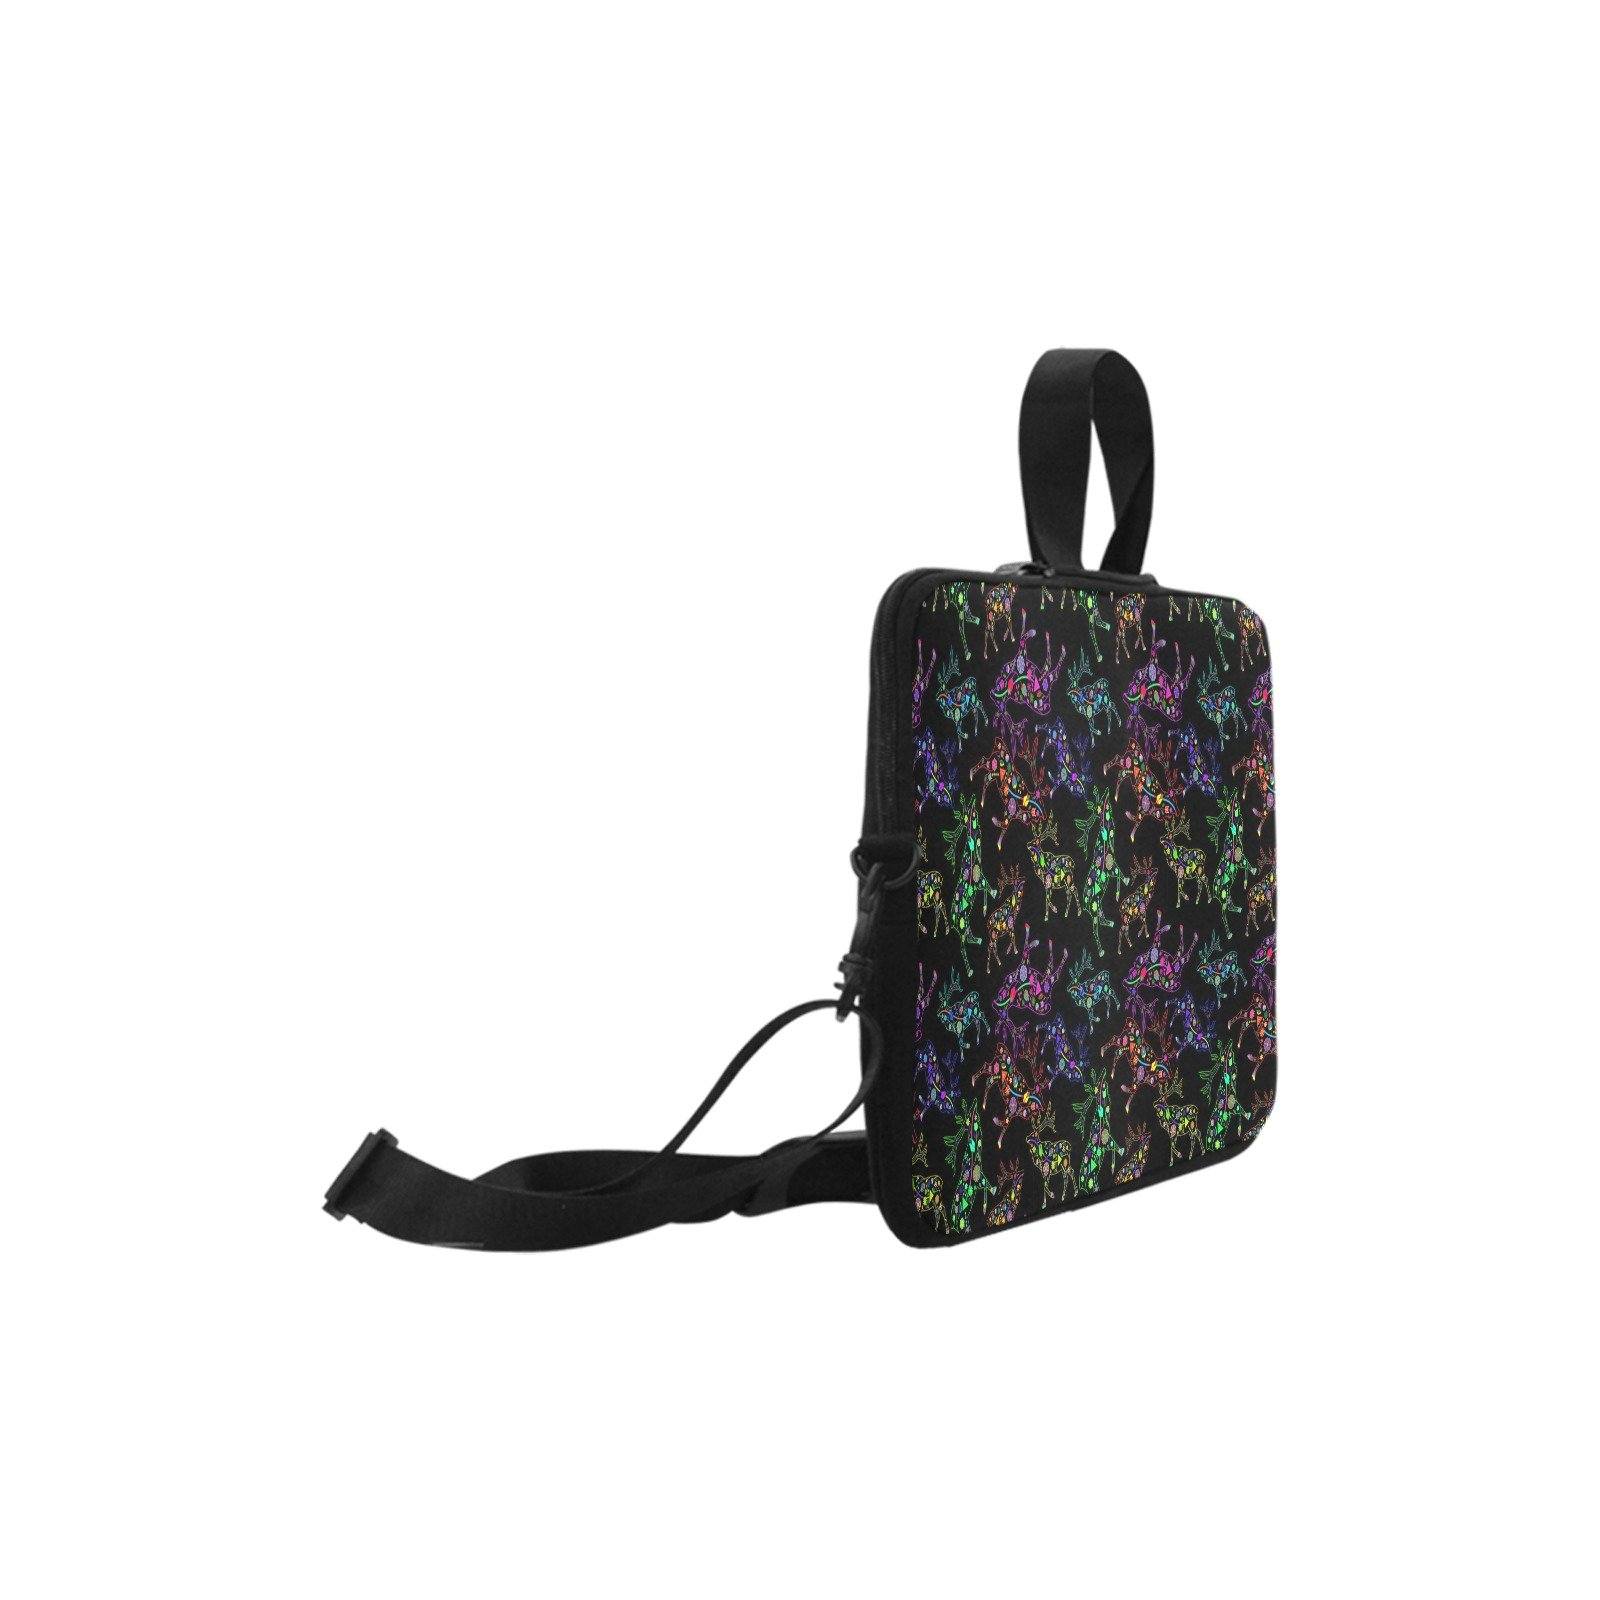 Floral Elk Laptop Handbags 17" bag e-joyer 